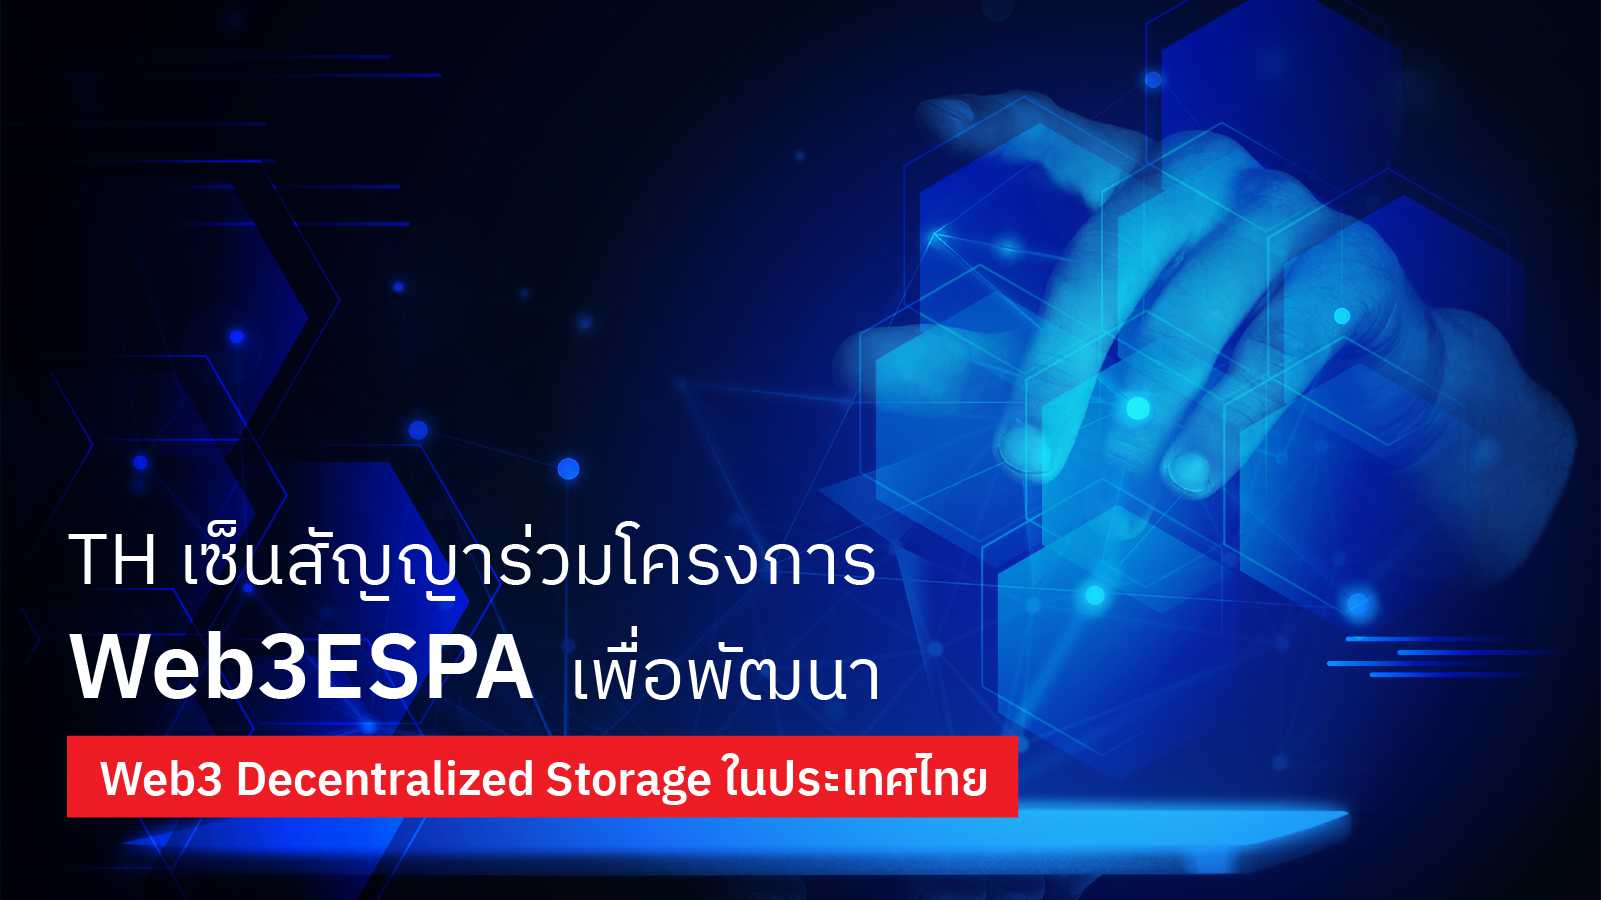 TH เซ็นสัญญาร่วมโครงการ Web3ESPA เพื่อพัฒนา Web3 Decentralized Storage ในประเทศไทย